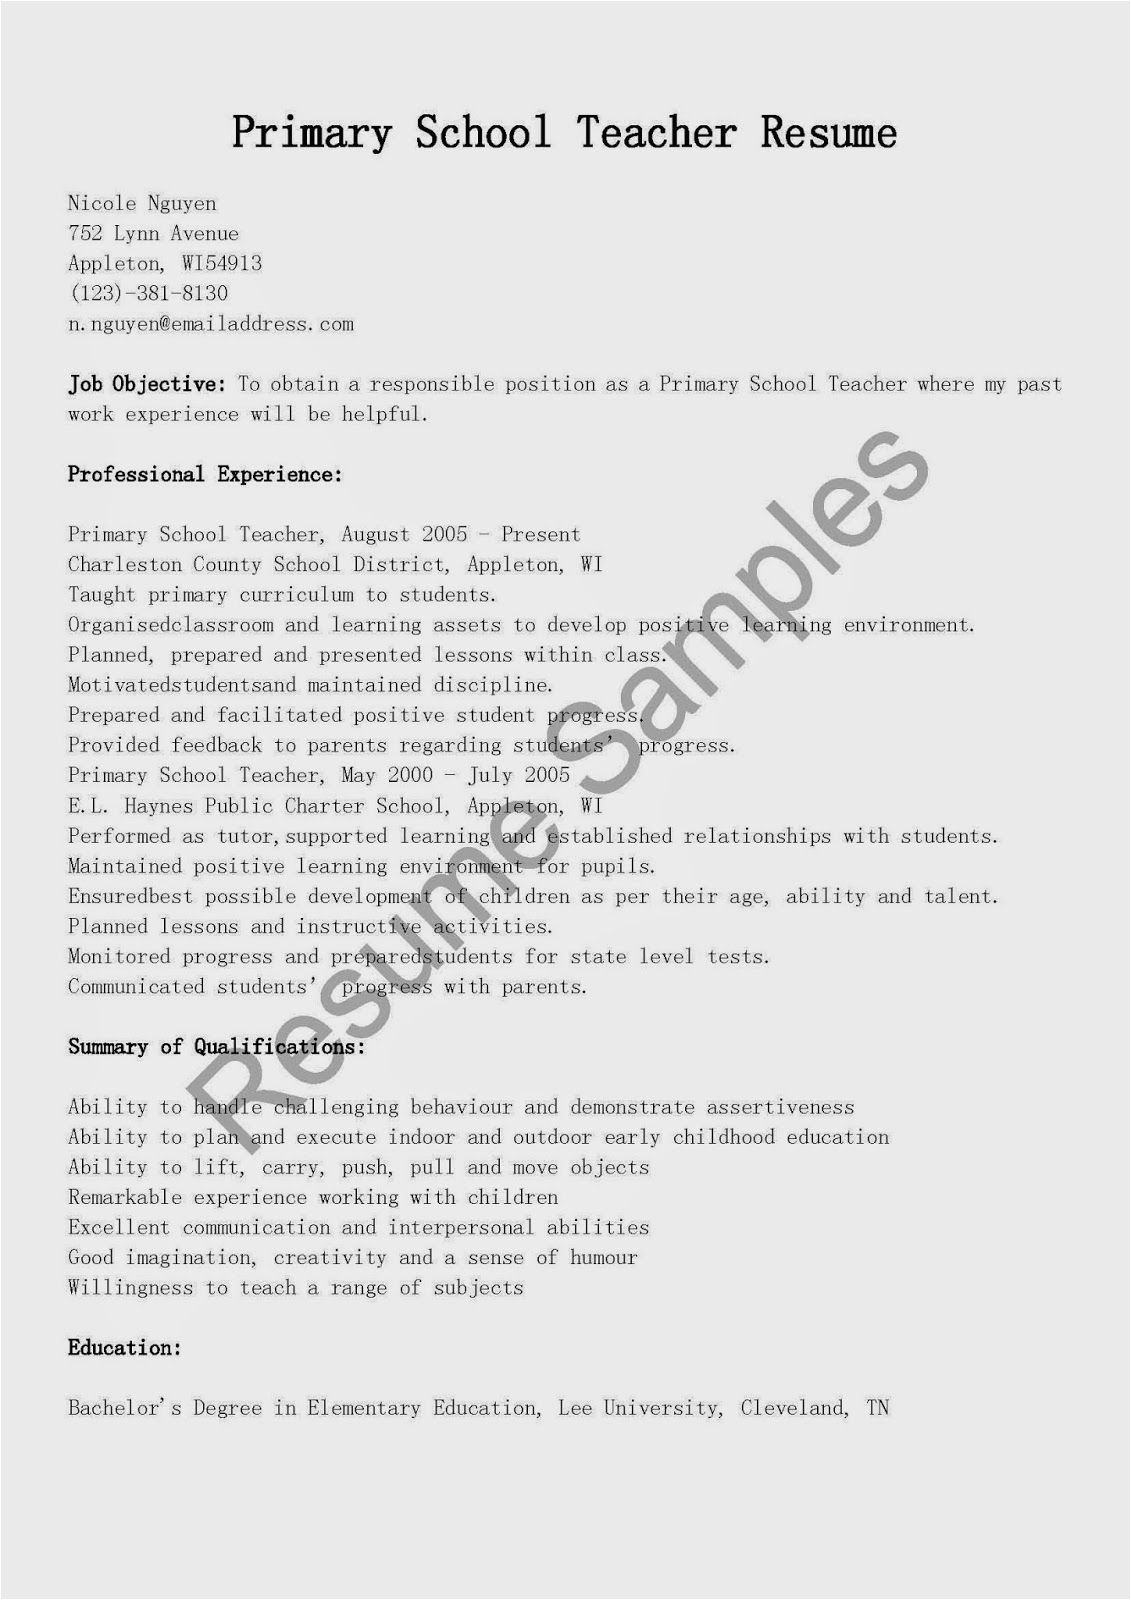 Sample Resume for Primary School Teacher with Experience Resume Samples Primary School Teacher Resume Sample